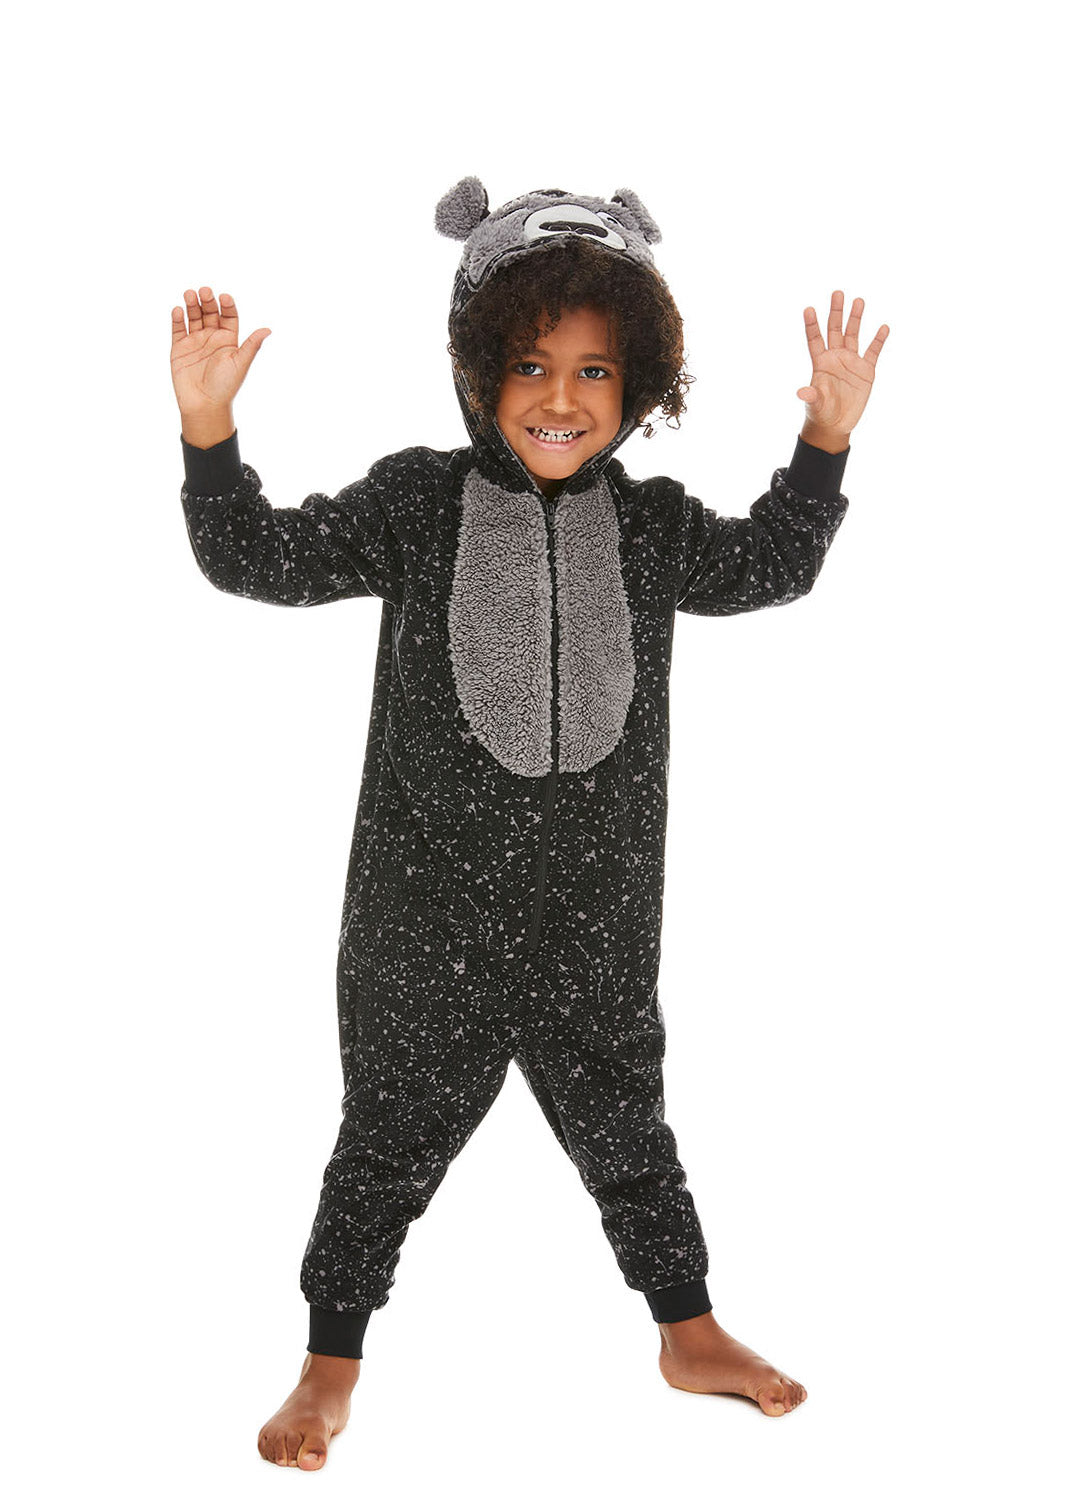 Fun Boy wearing Black Bear Onesie